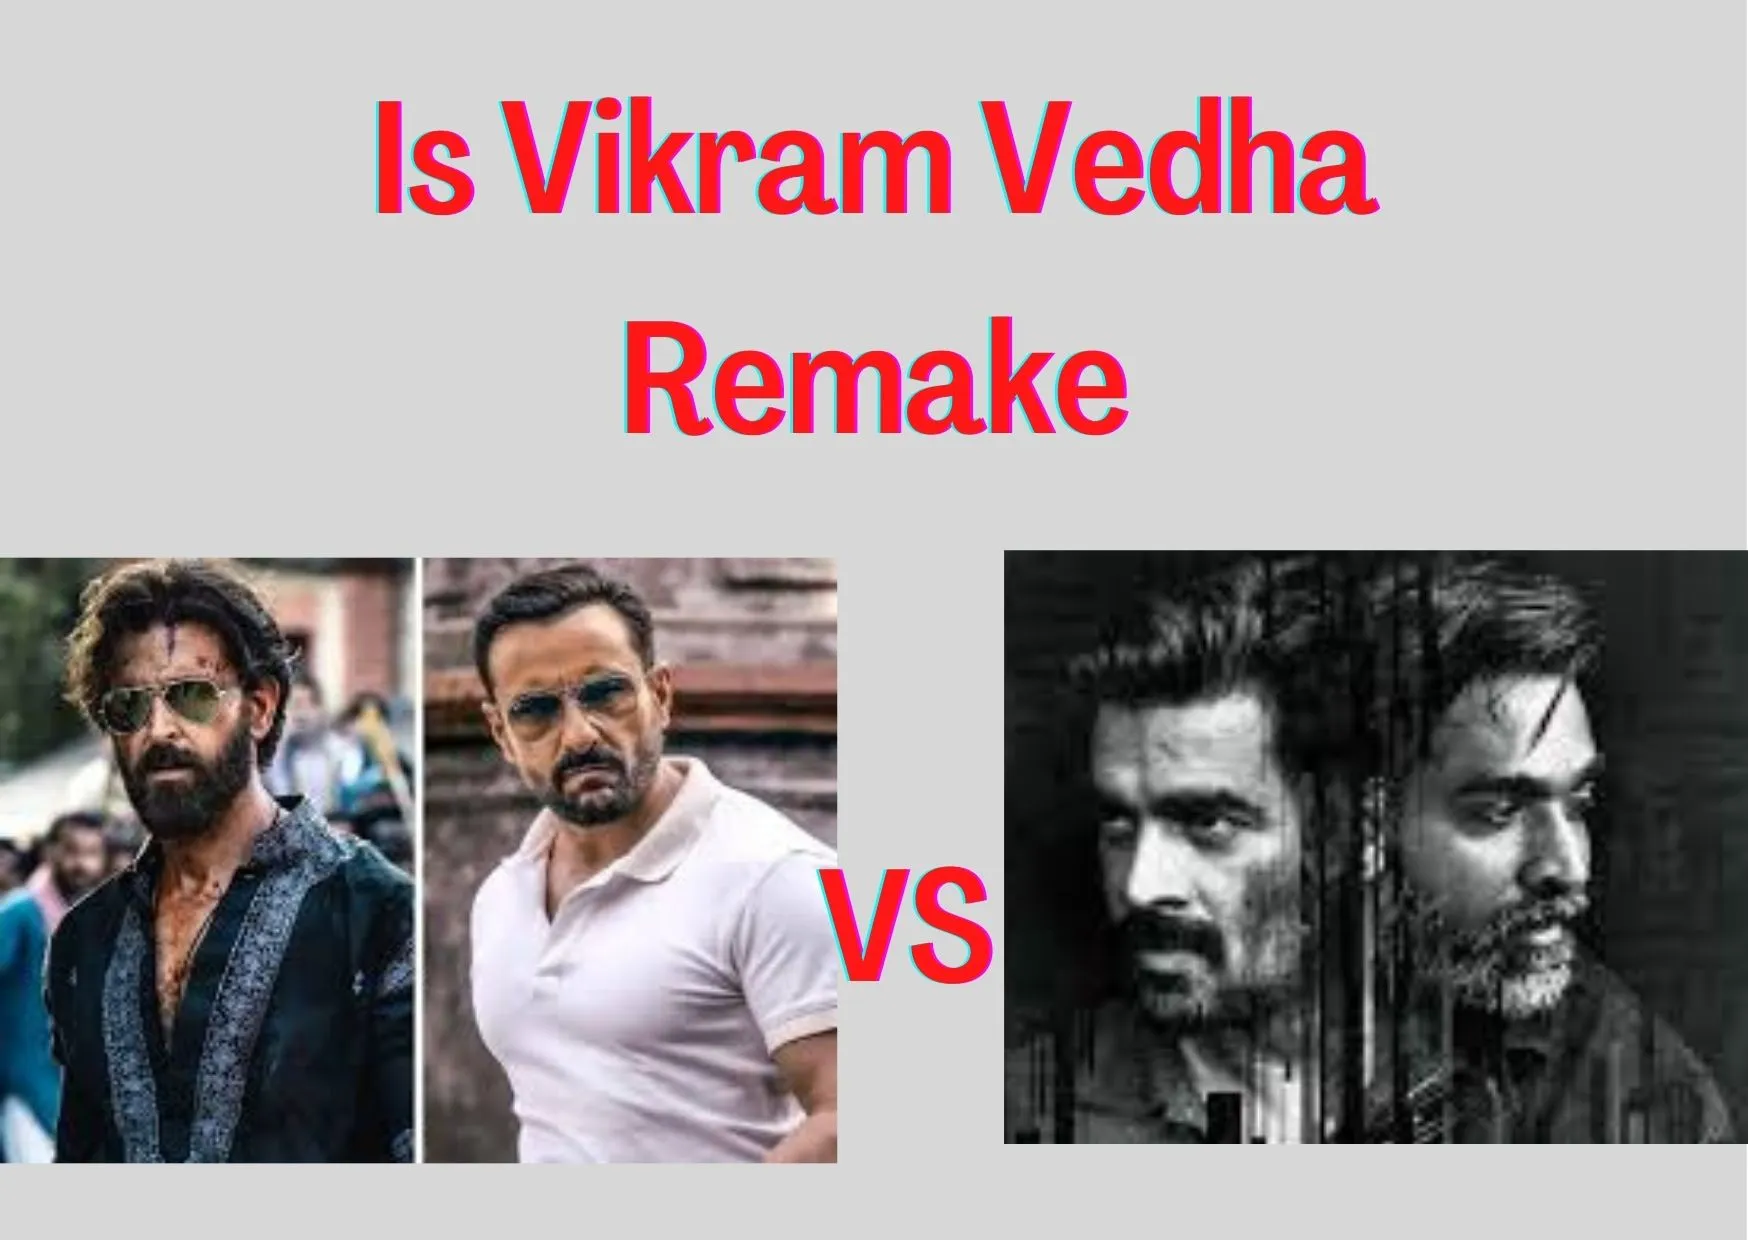 Is Vikram Vedha of Hrithik Roshan a remake